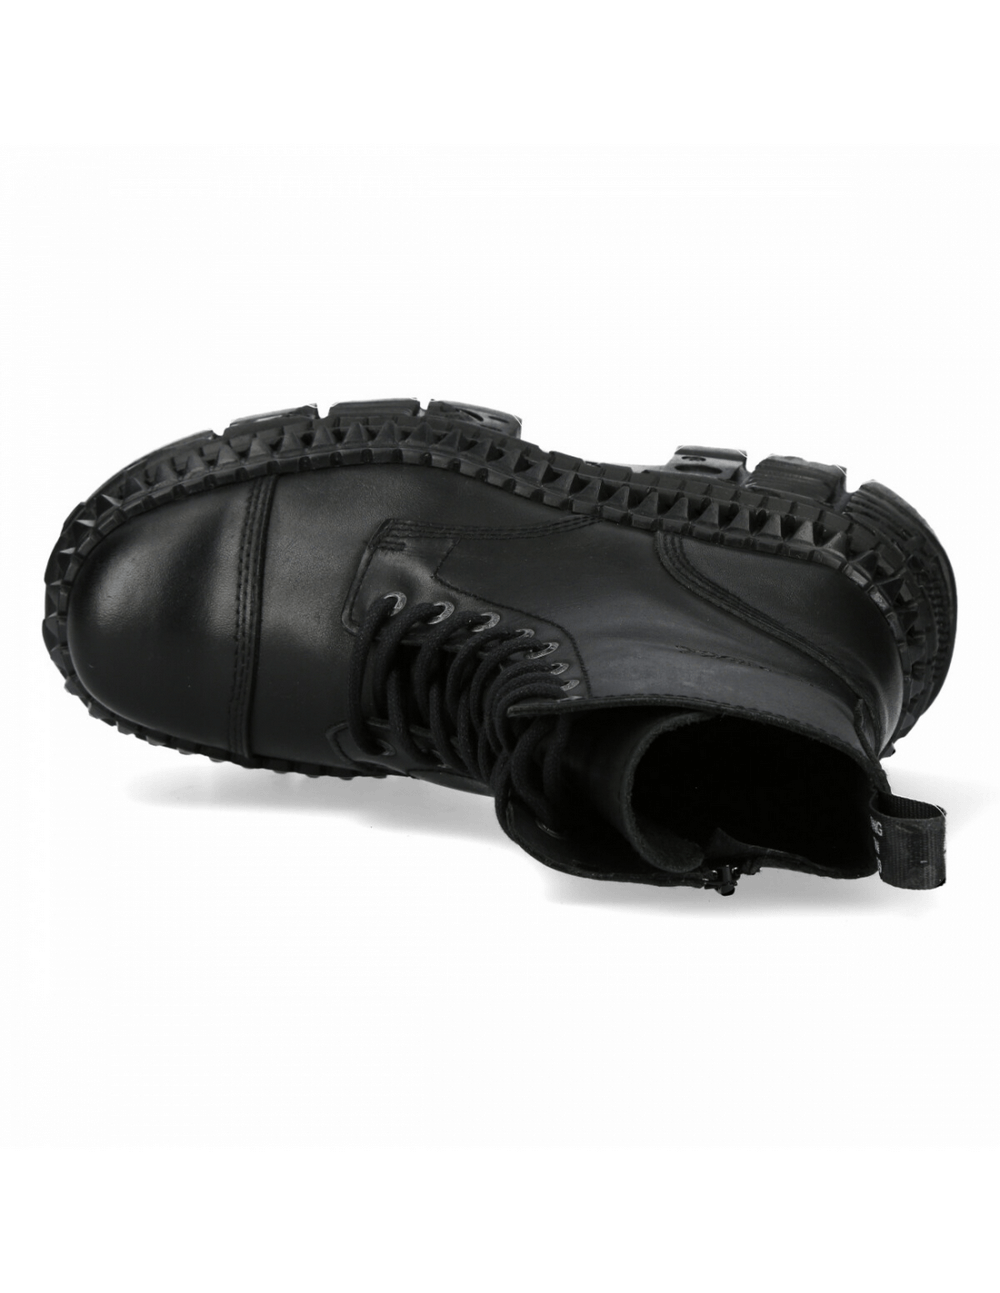 NEW ROCK Unisex Black Leather Platform Ankle Boots